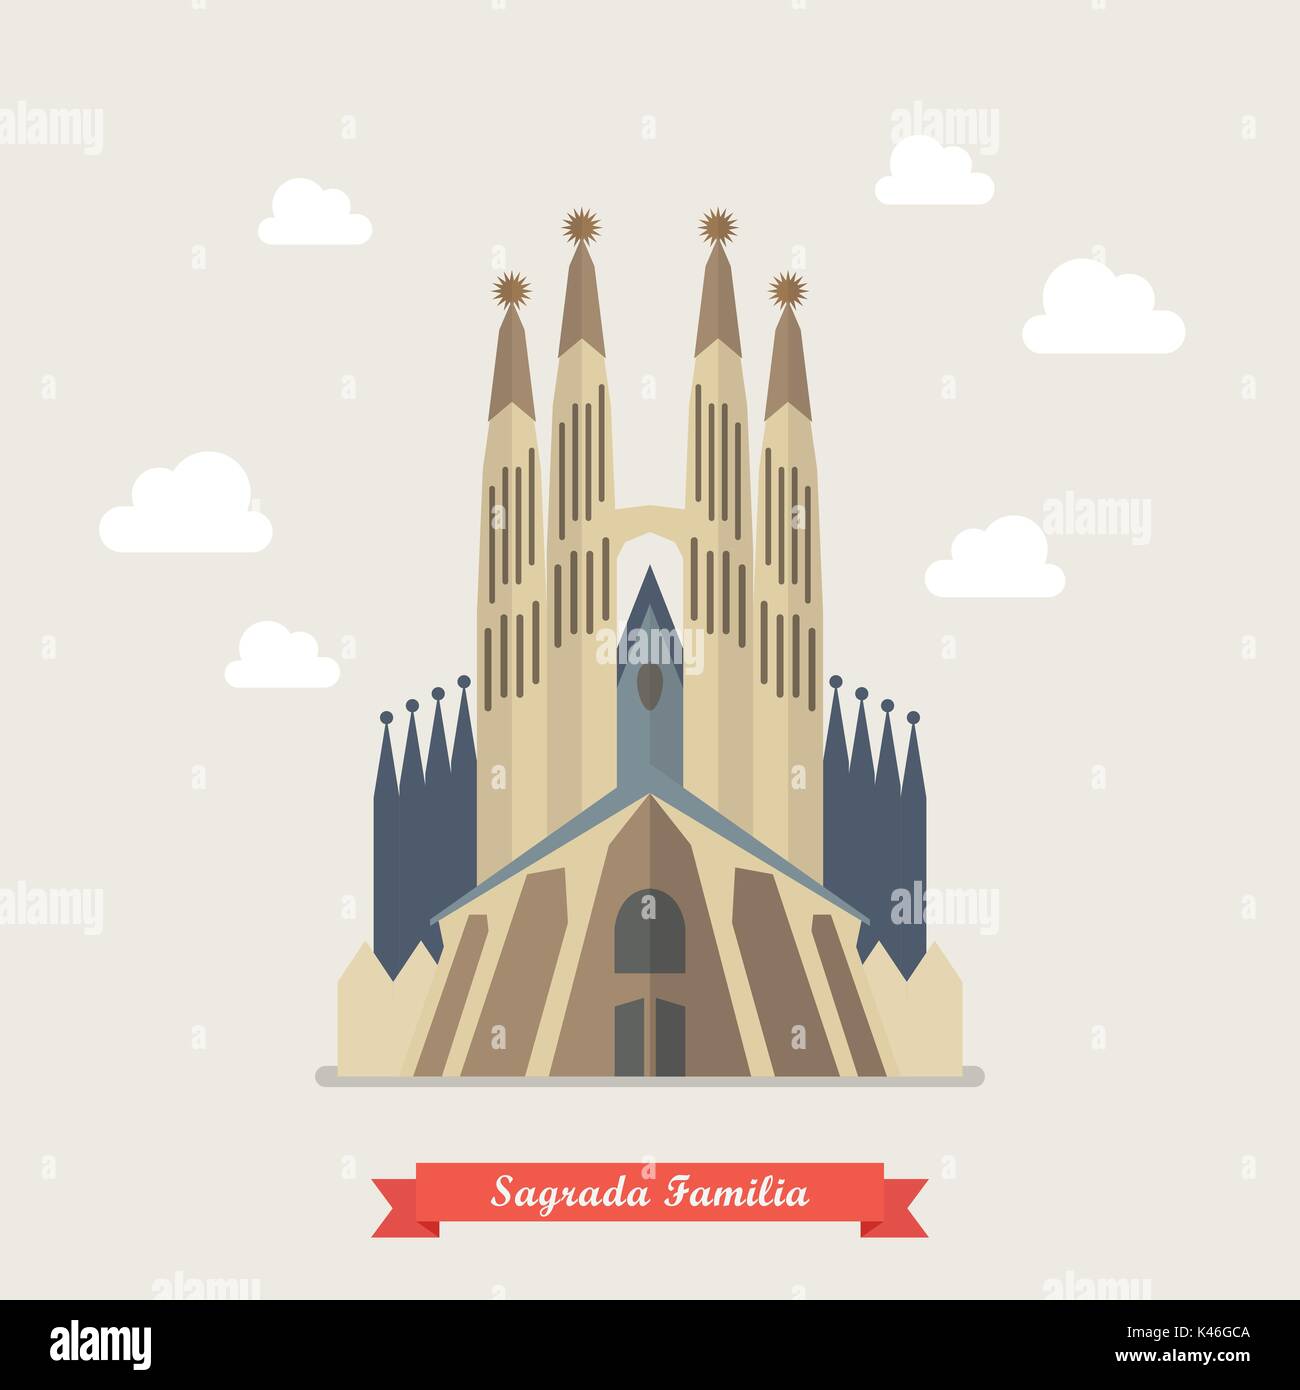 Spain the sagrada familia by antoni gaudi Stock Vector Images - Alamy